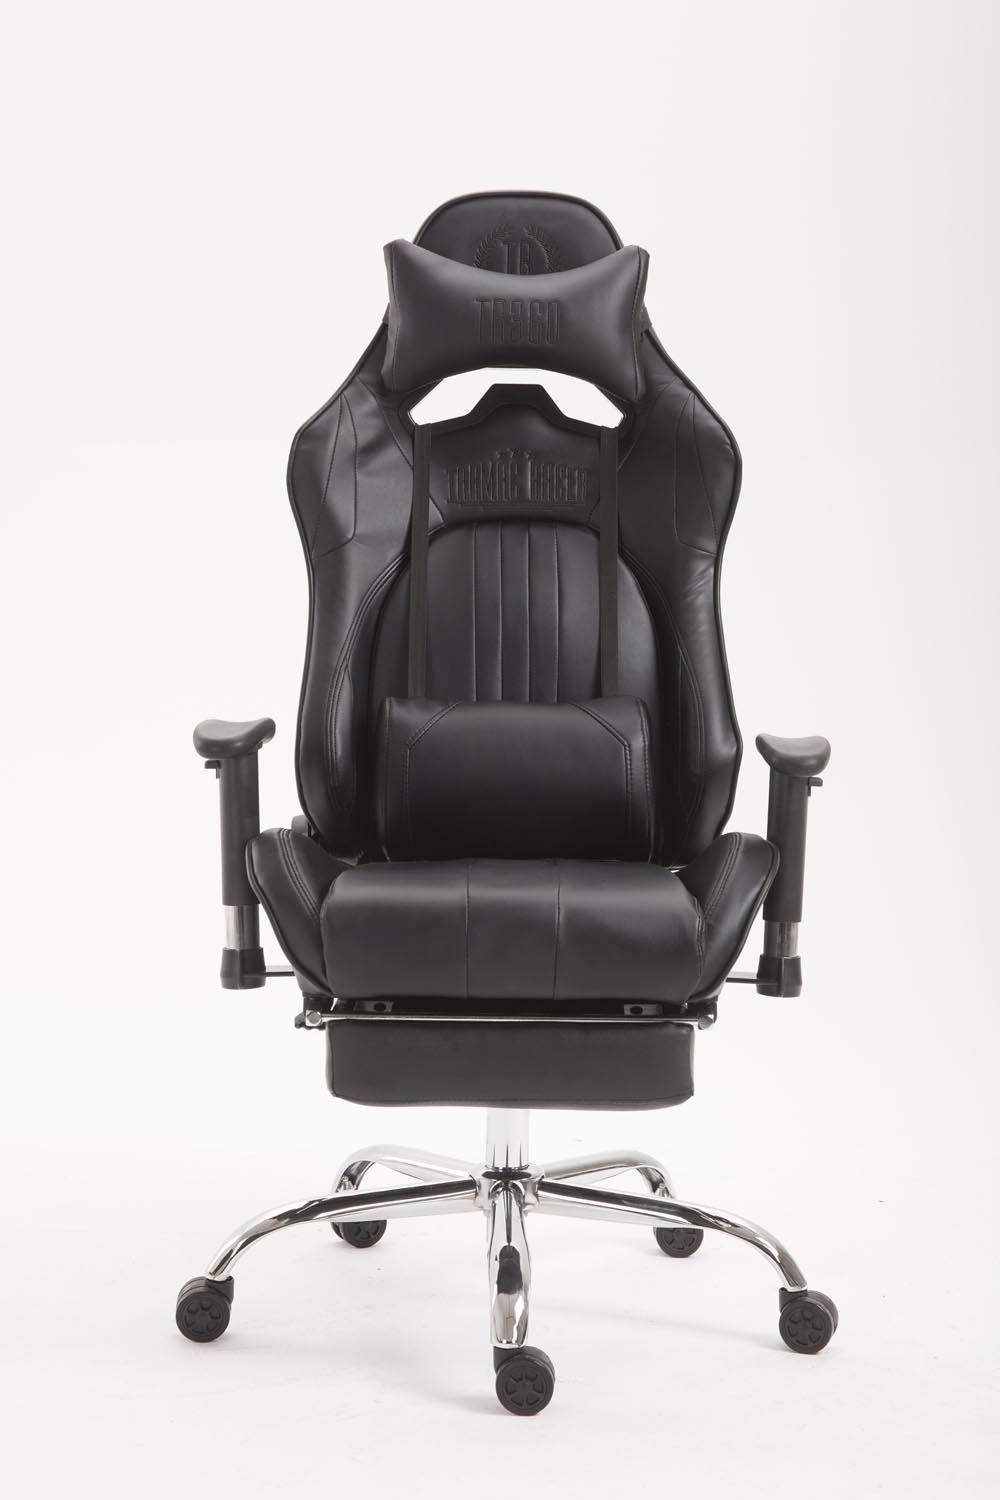 schwarz/schwarz Kunstleder CLP V2 Limit Bürostuhl Racing Chair, Fußablage Gaming mit